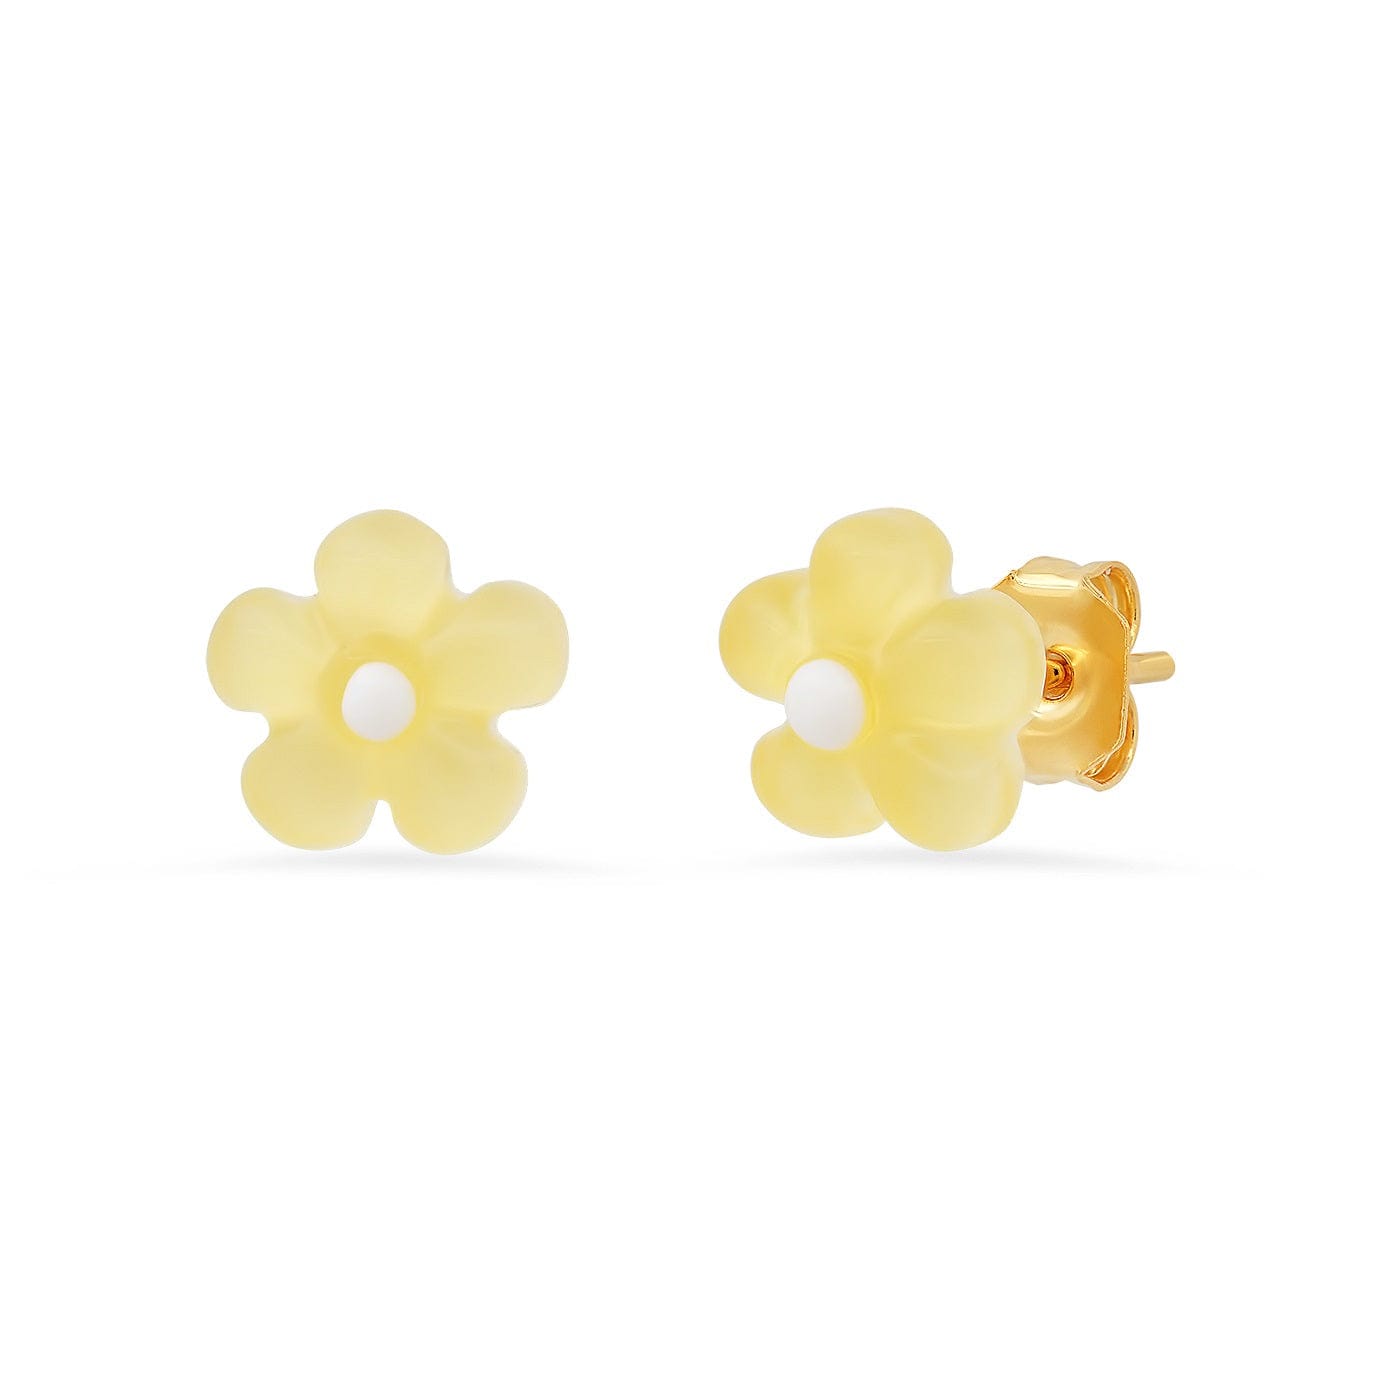 TAI JEWELRY Earrings Yellow Whimsical Daisy Studs